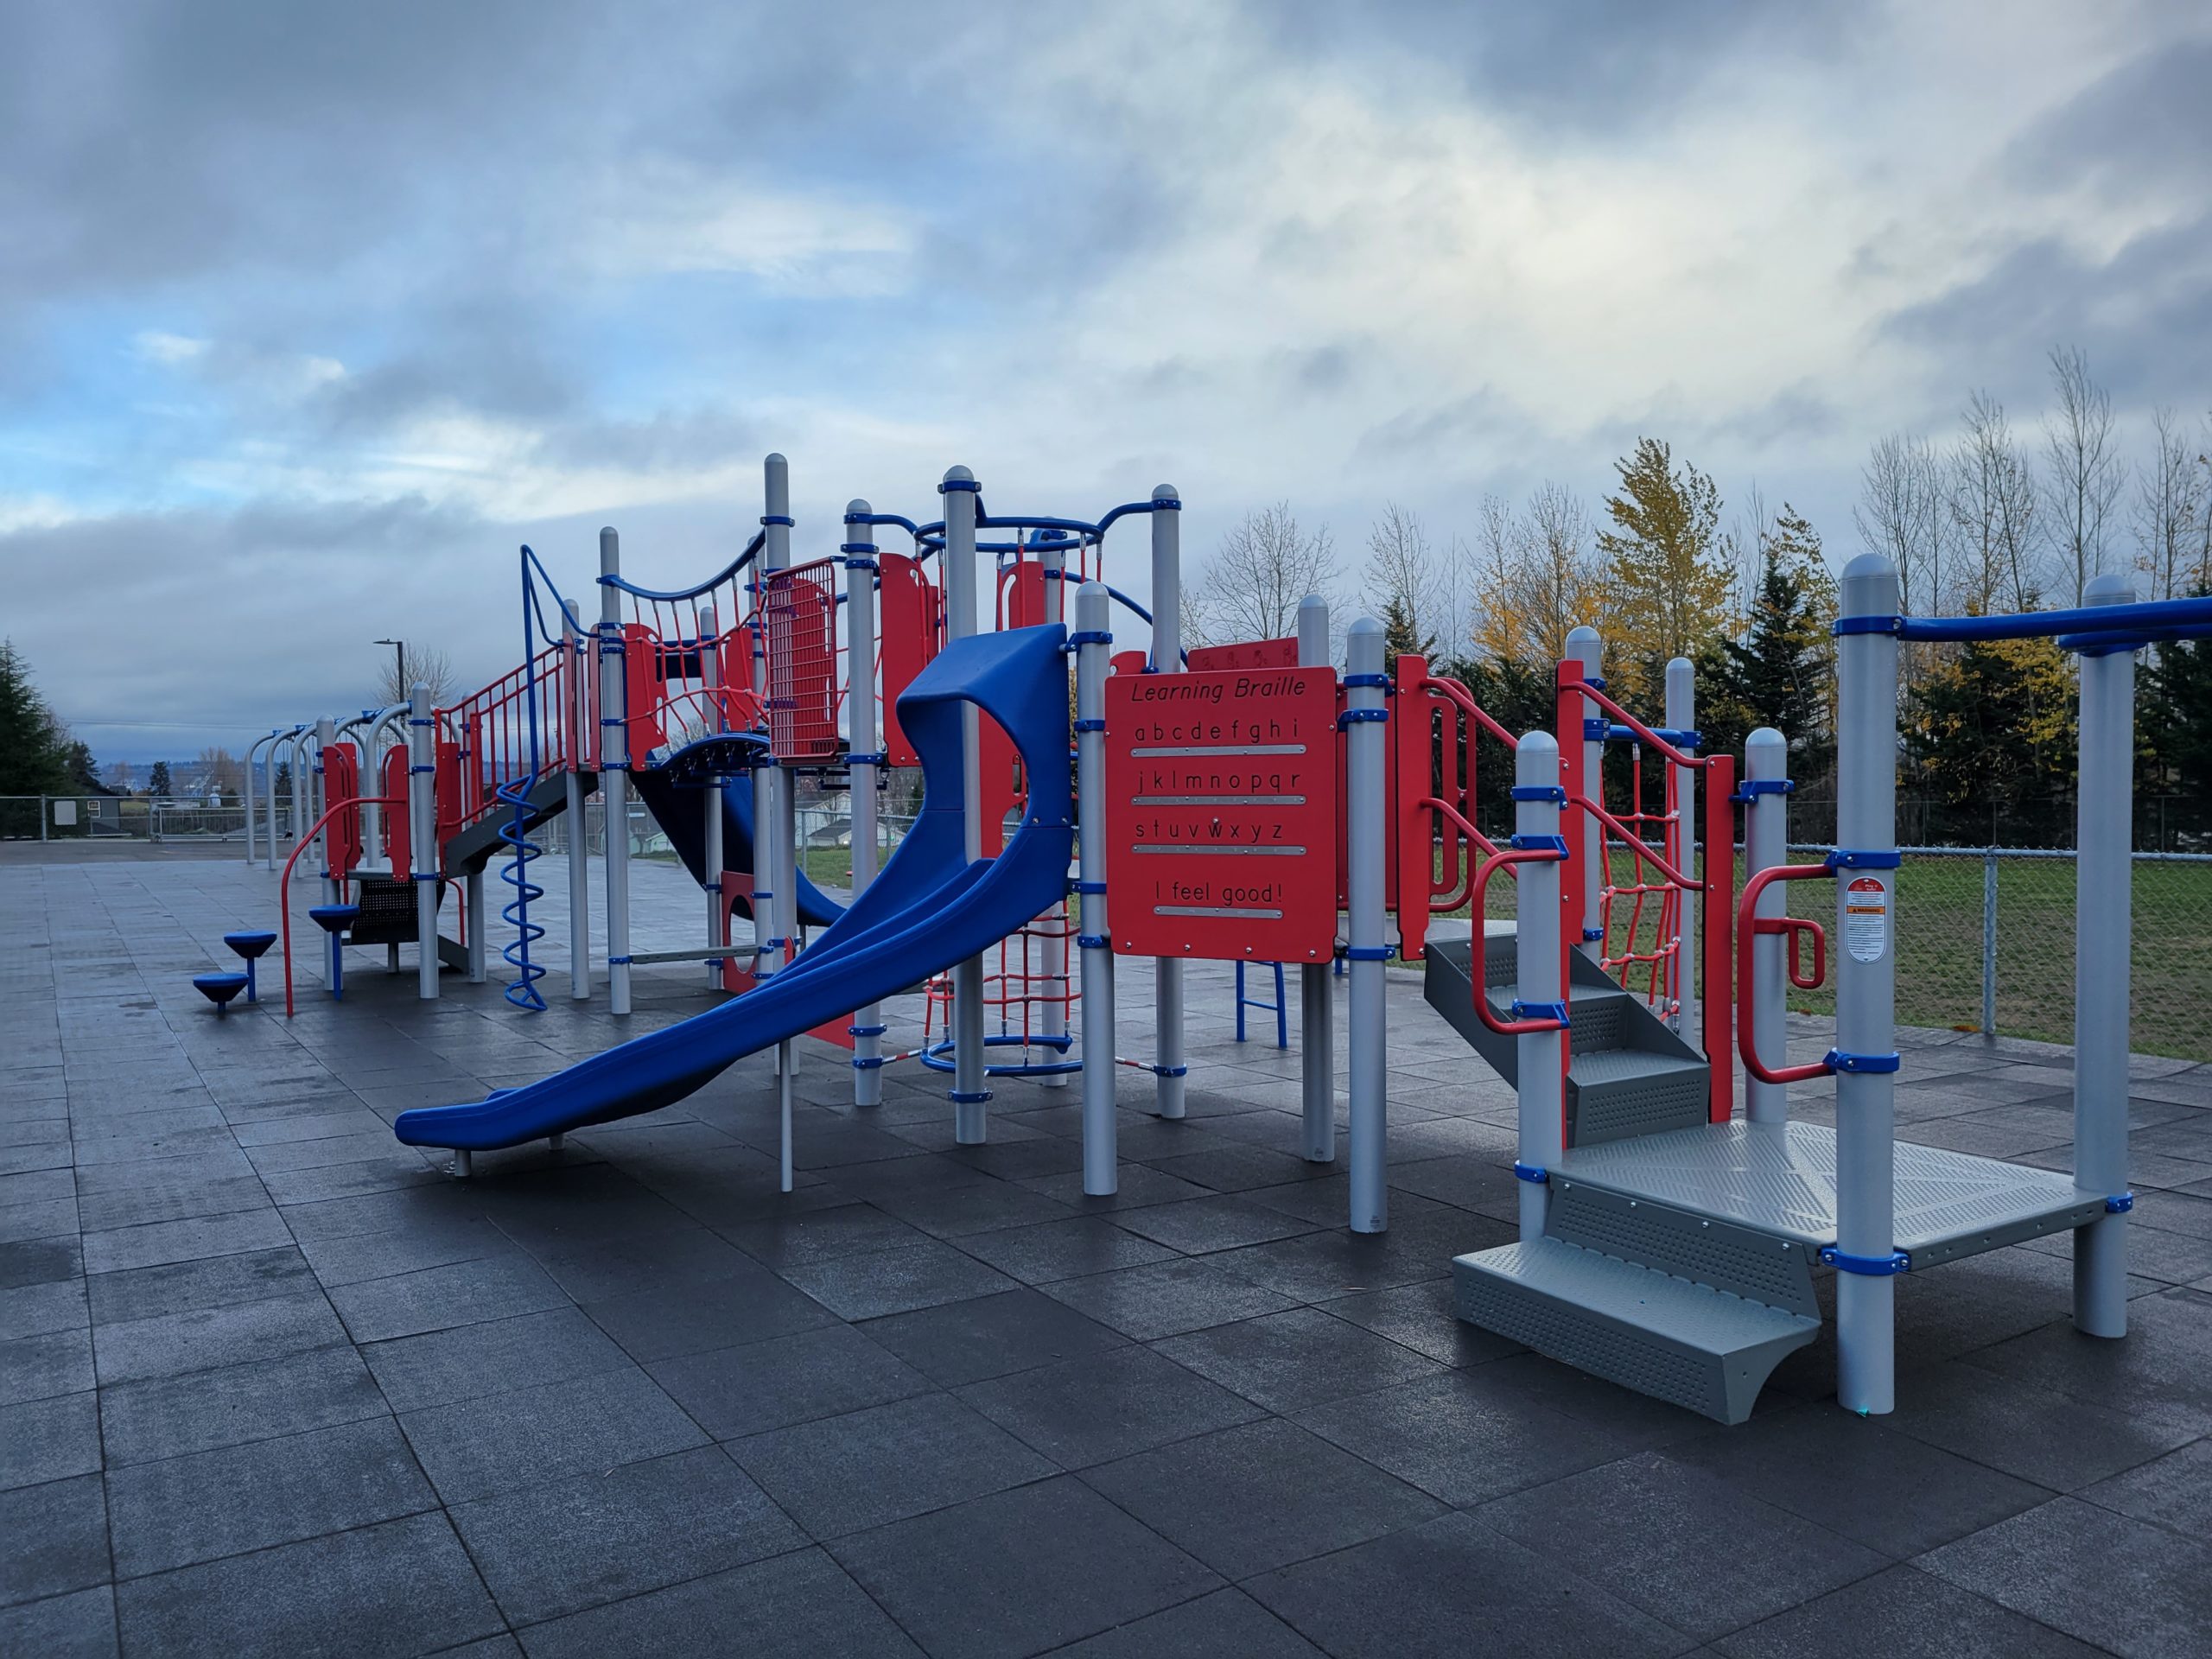 Blix Elementary School Playground